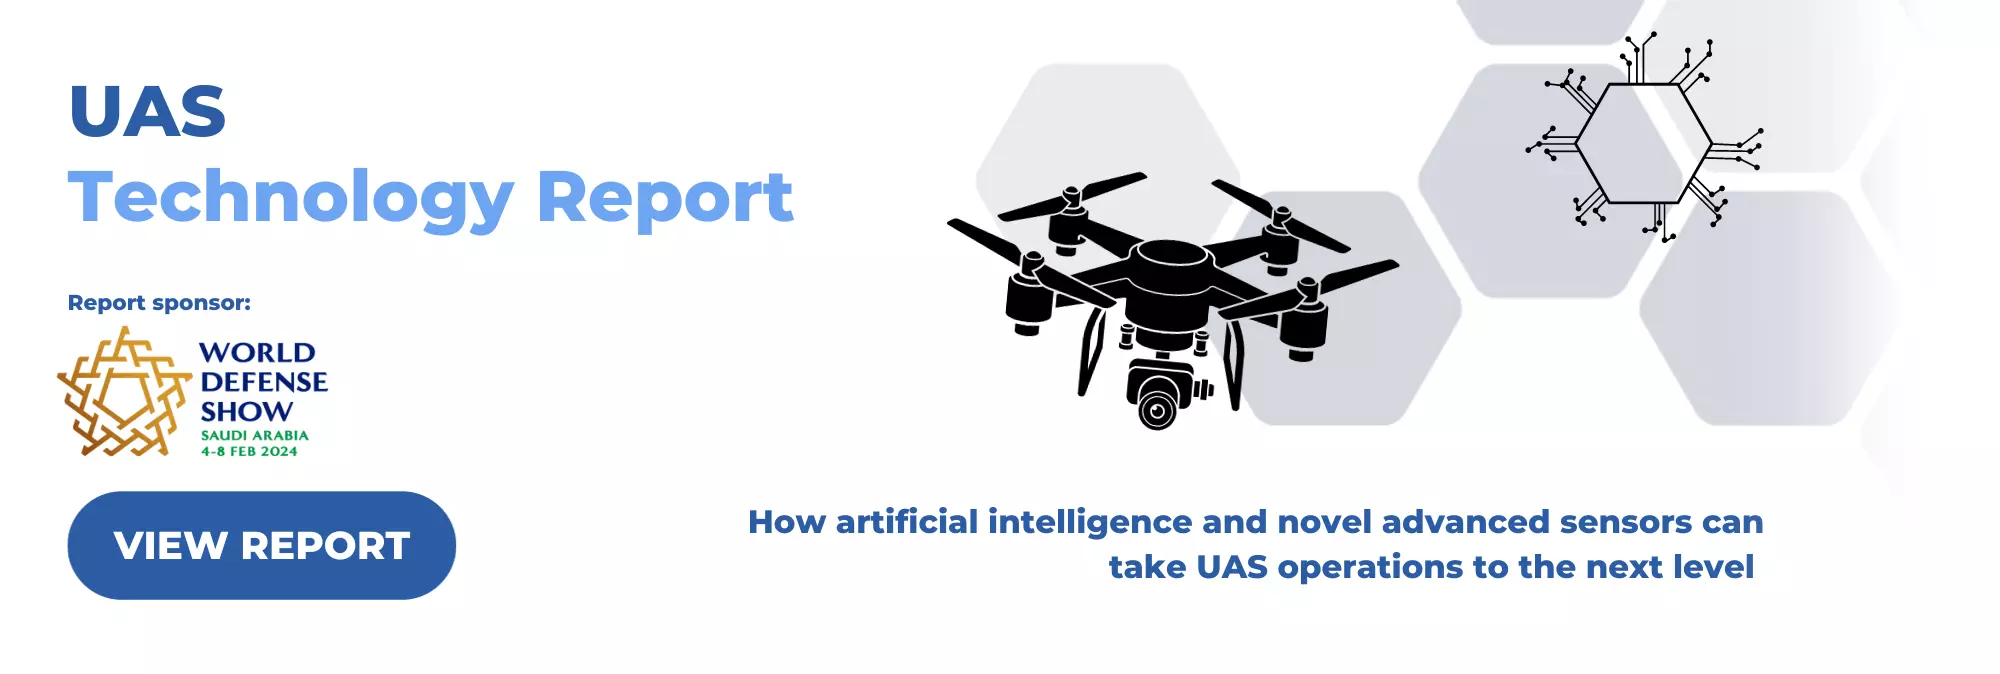 UAS Technology Report